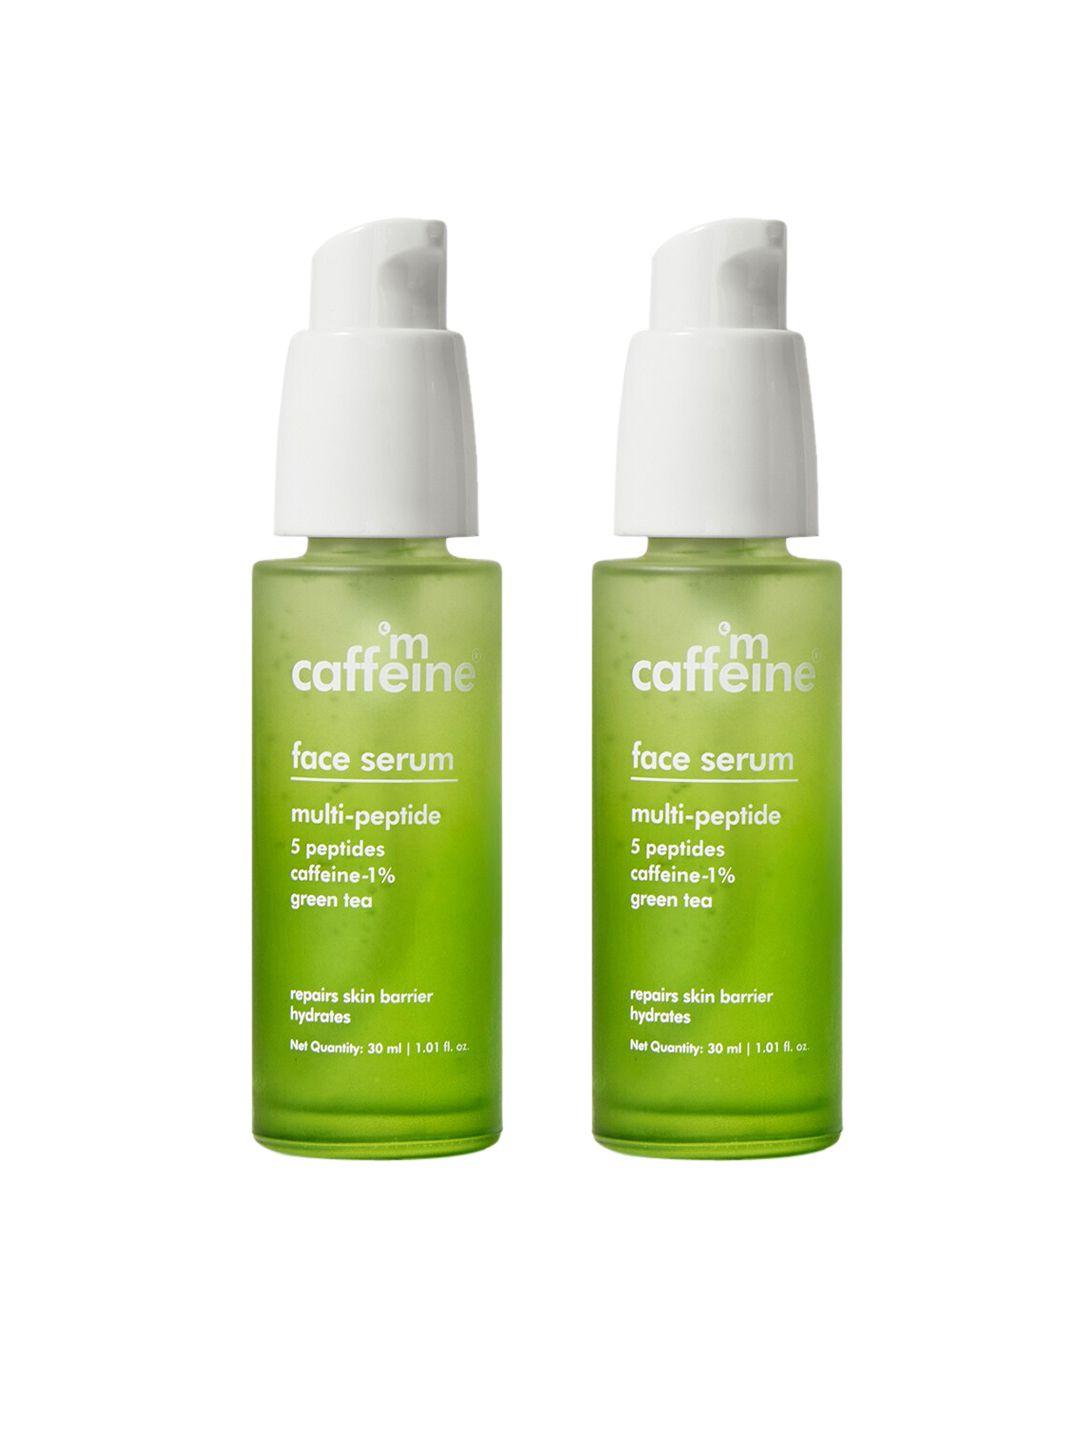 mcaffeine set of 2 green tea face serum with multi-peptides - 30ml each